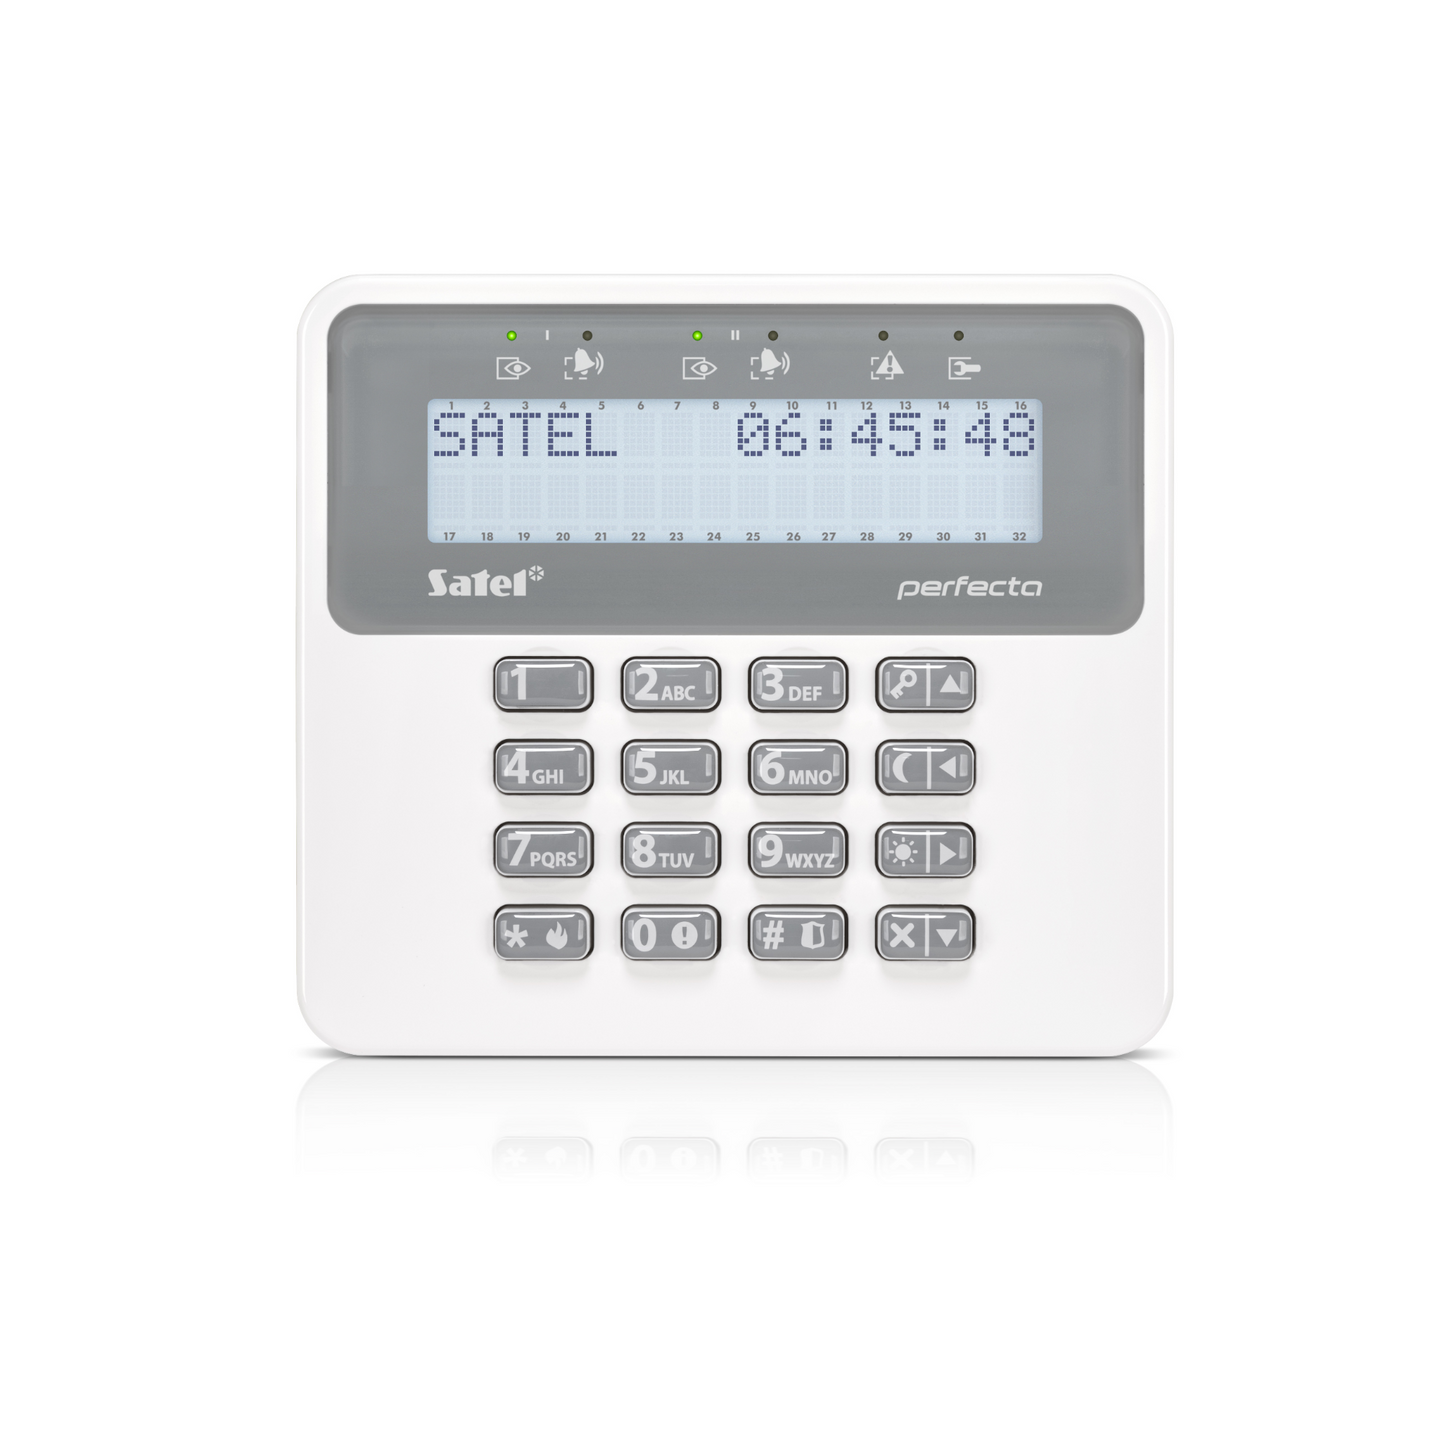 SATEL PRF-LCD Keypad for PERFECTA Control Panels